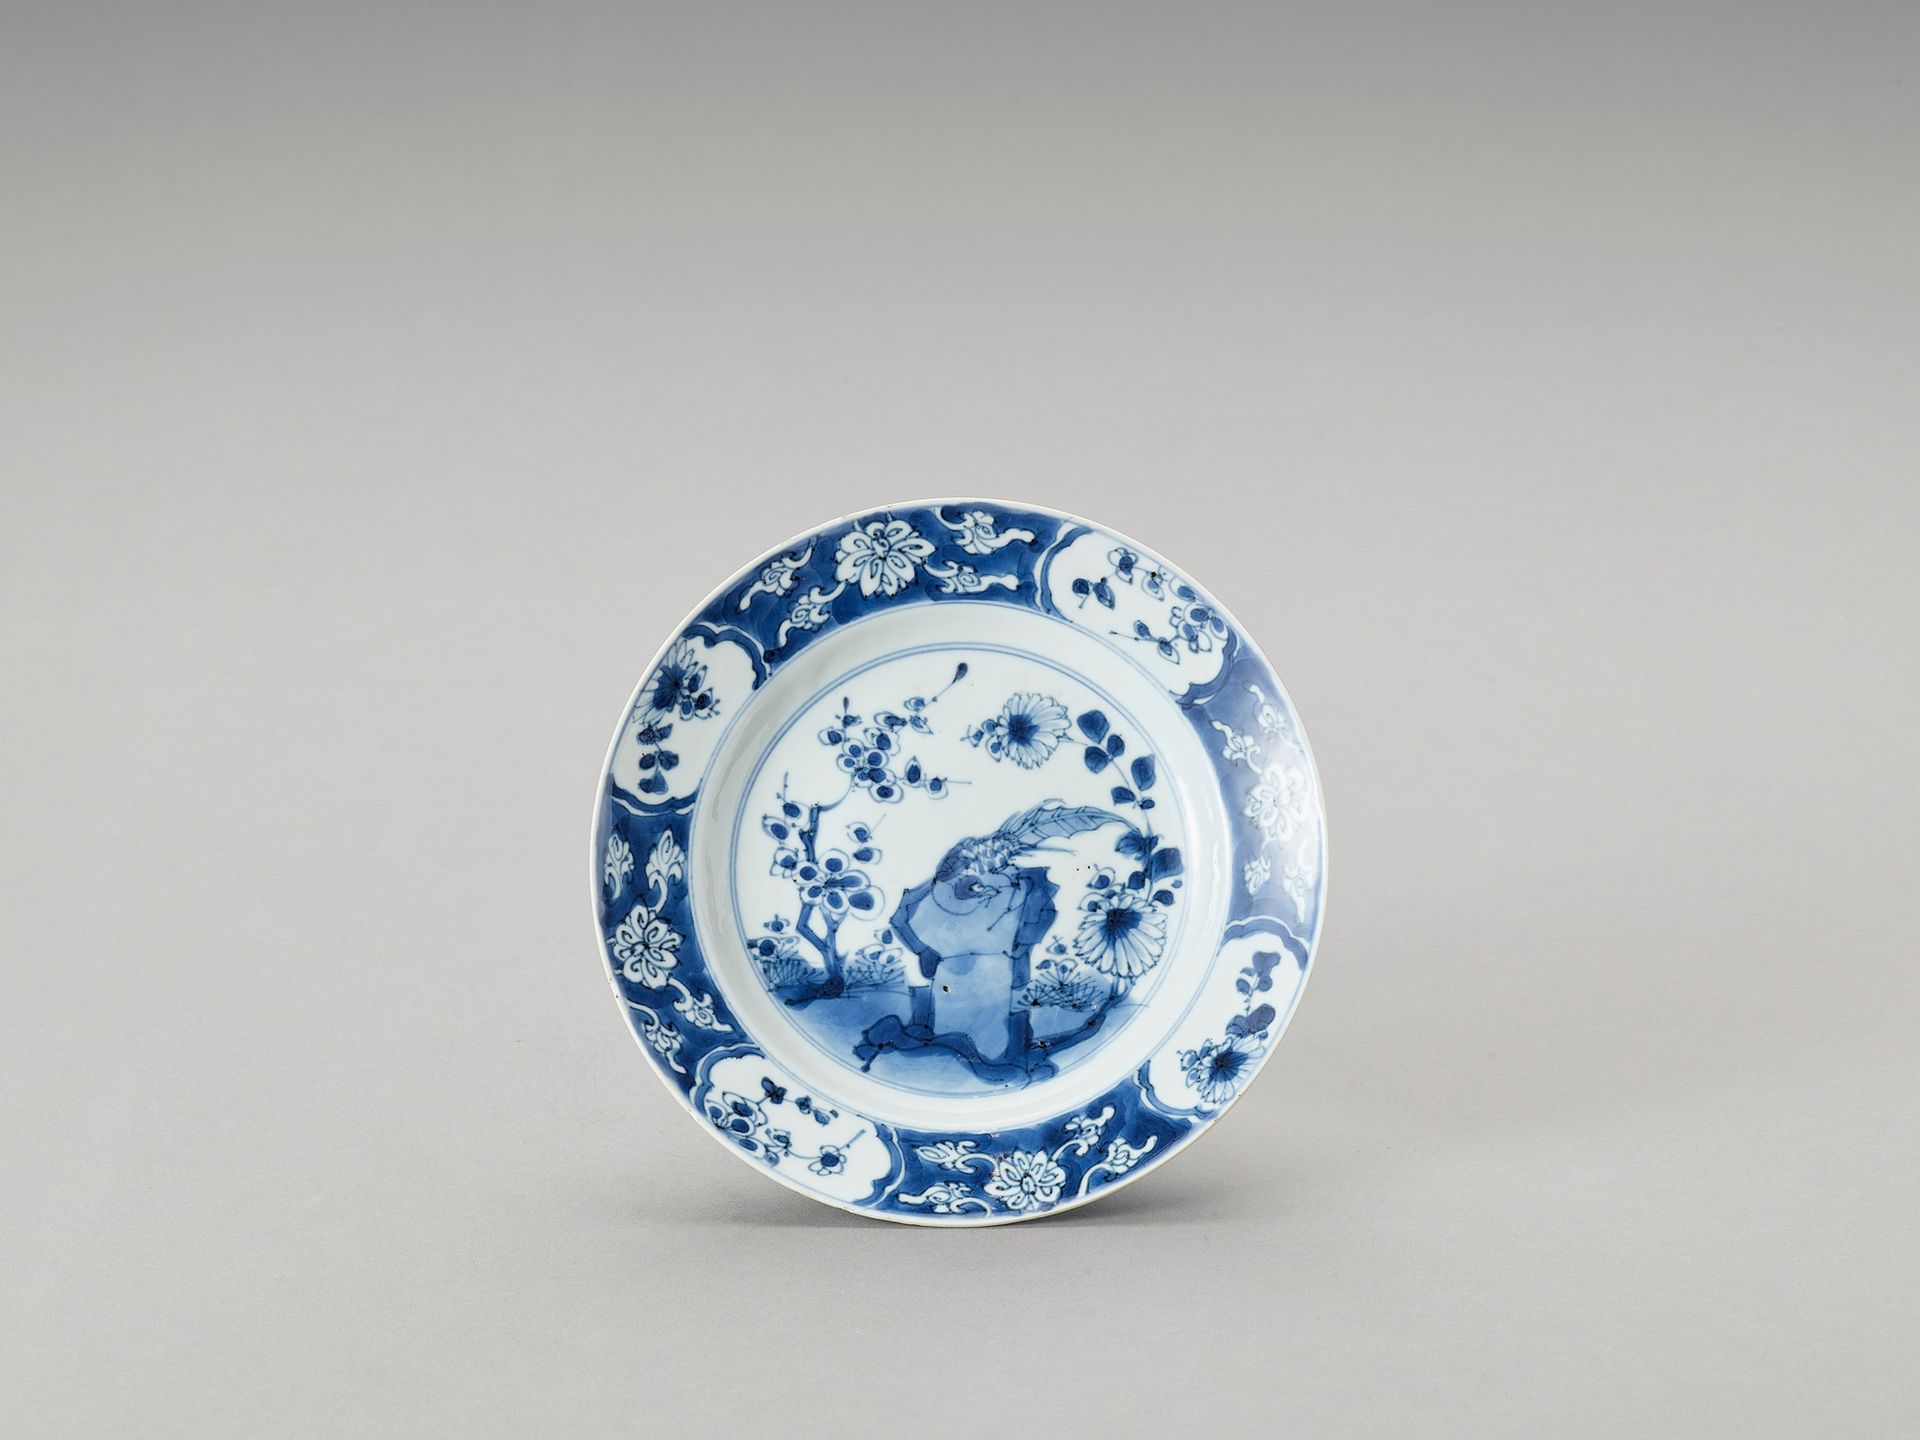 A Blue and White Porcelain Dish PLATO DE PORCELANA AZUL Y BLANCA
China, periodo &hellip;